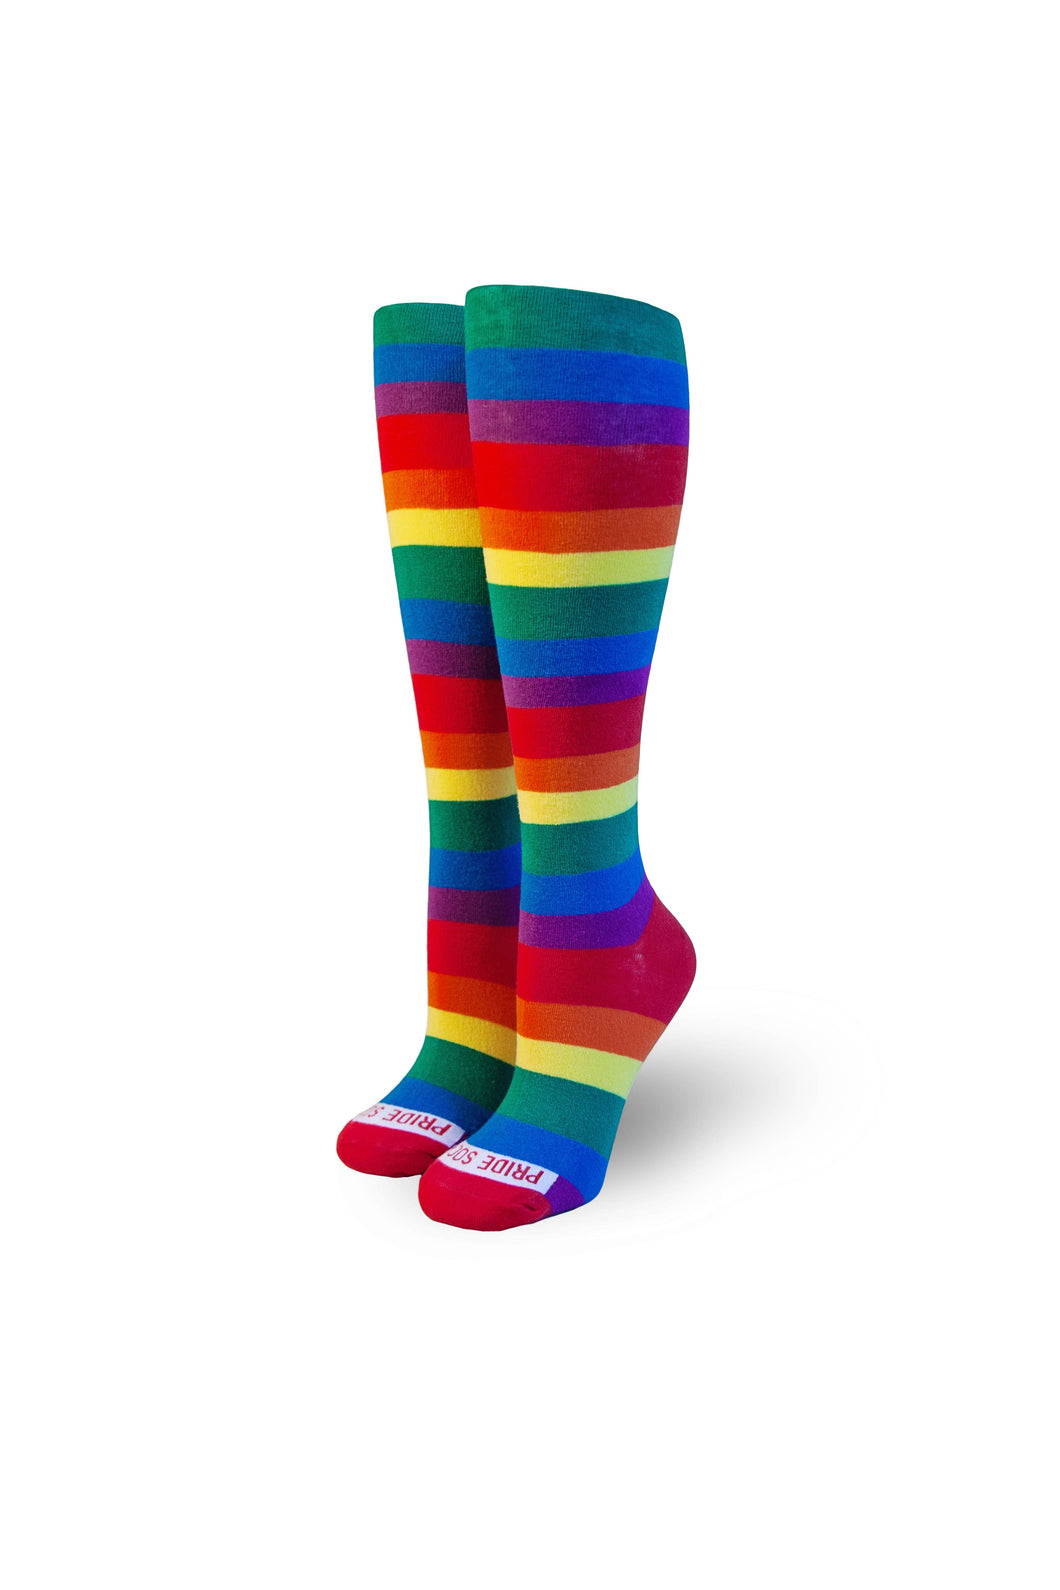 Thigh High Unisex Socks- Rainbow Rising